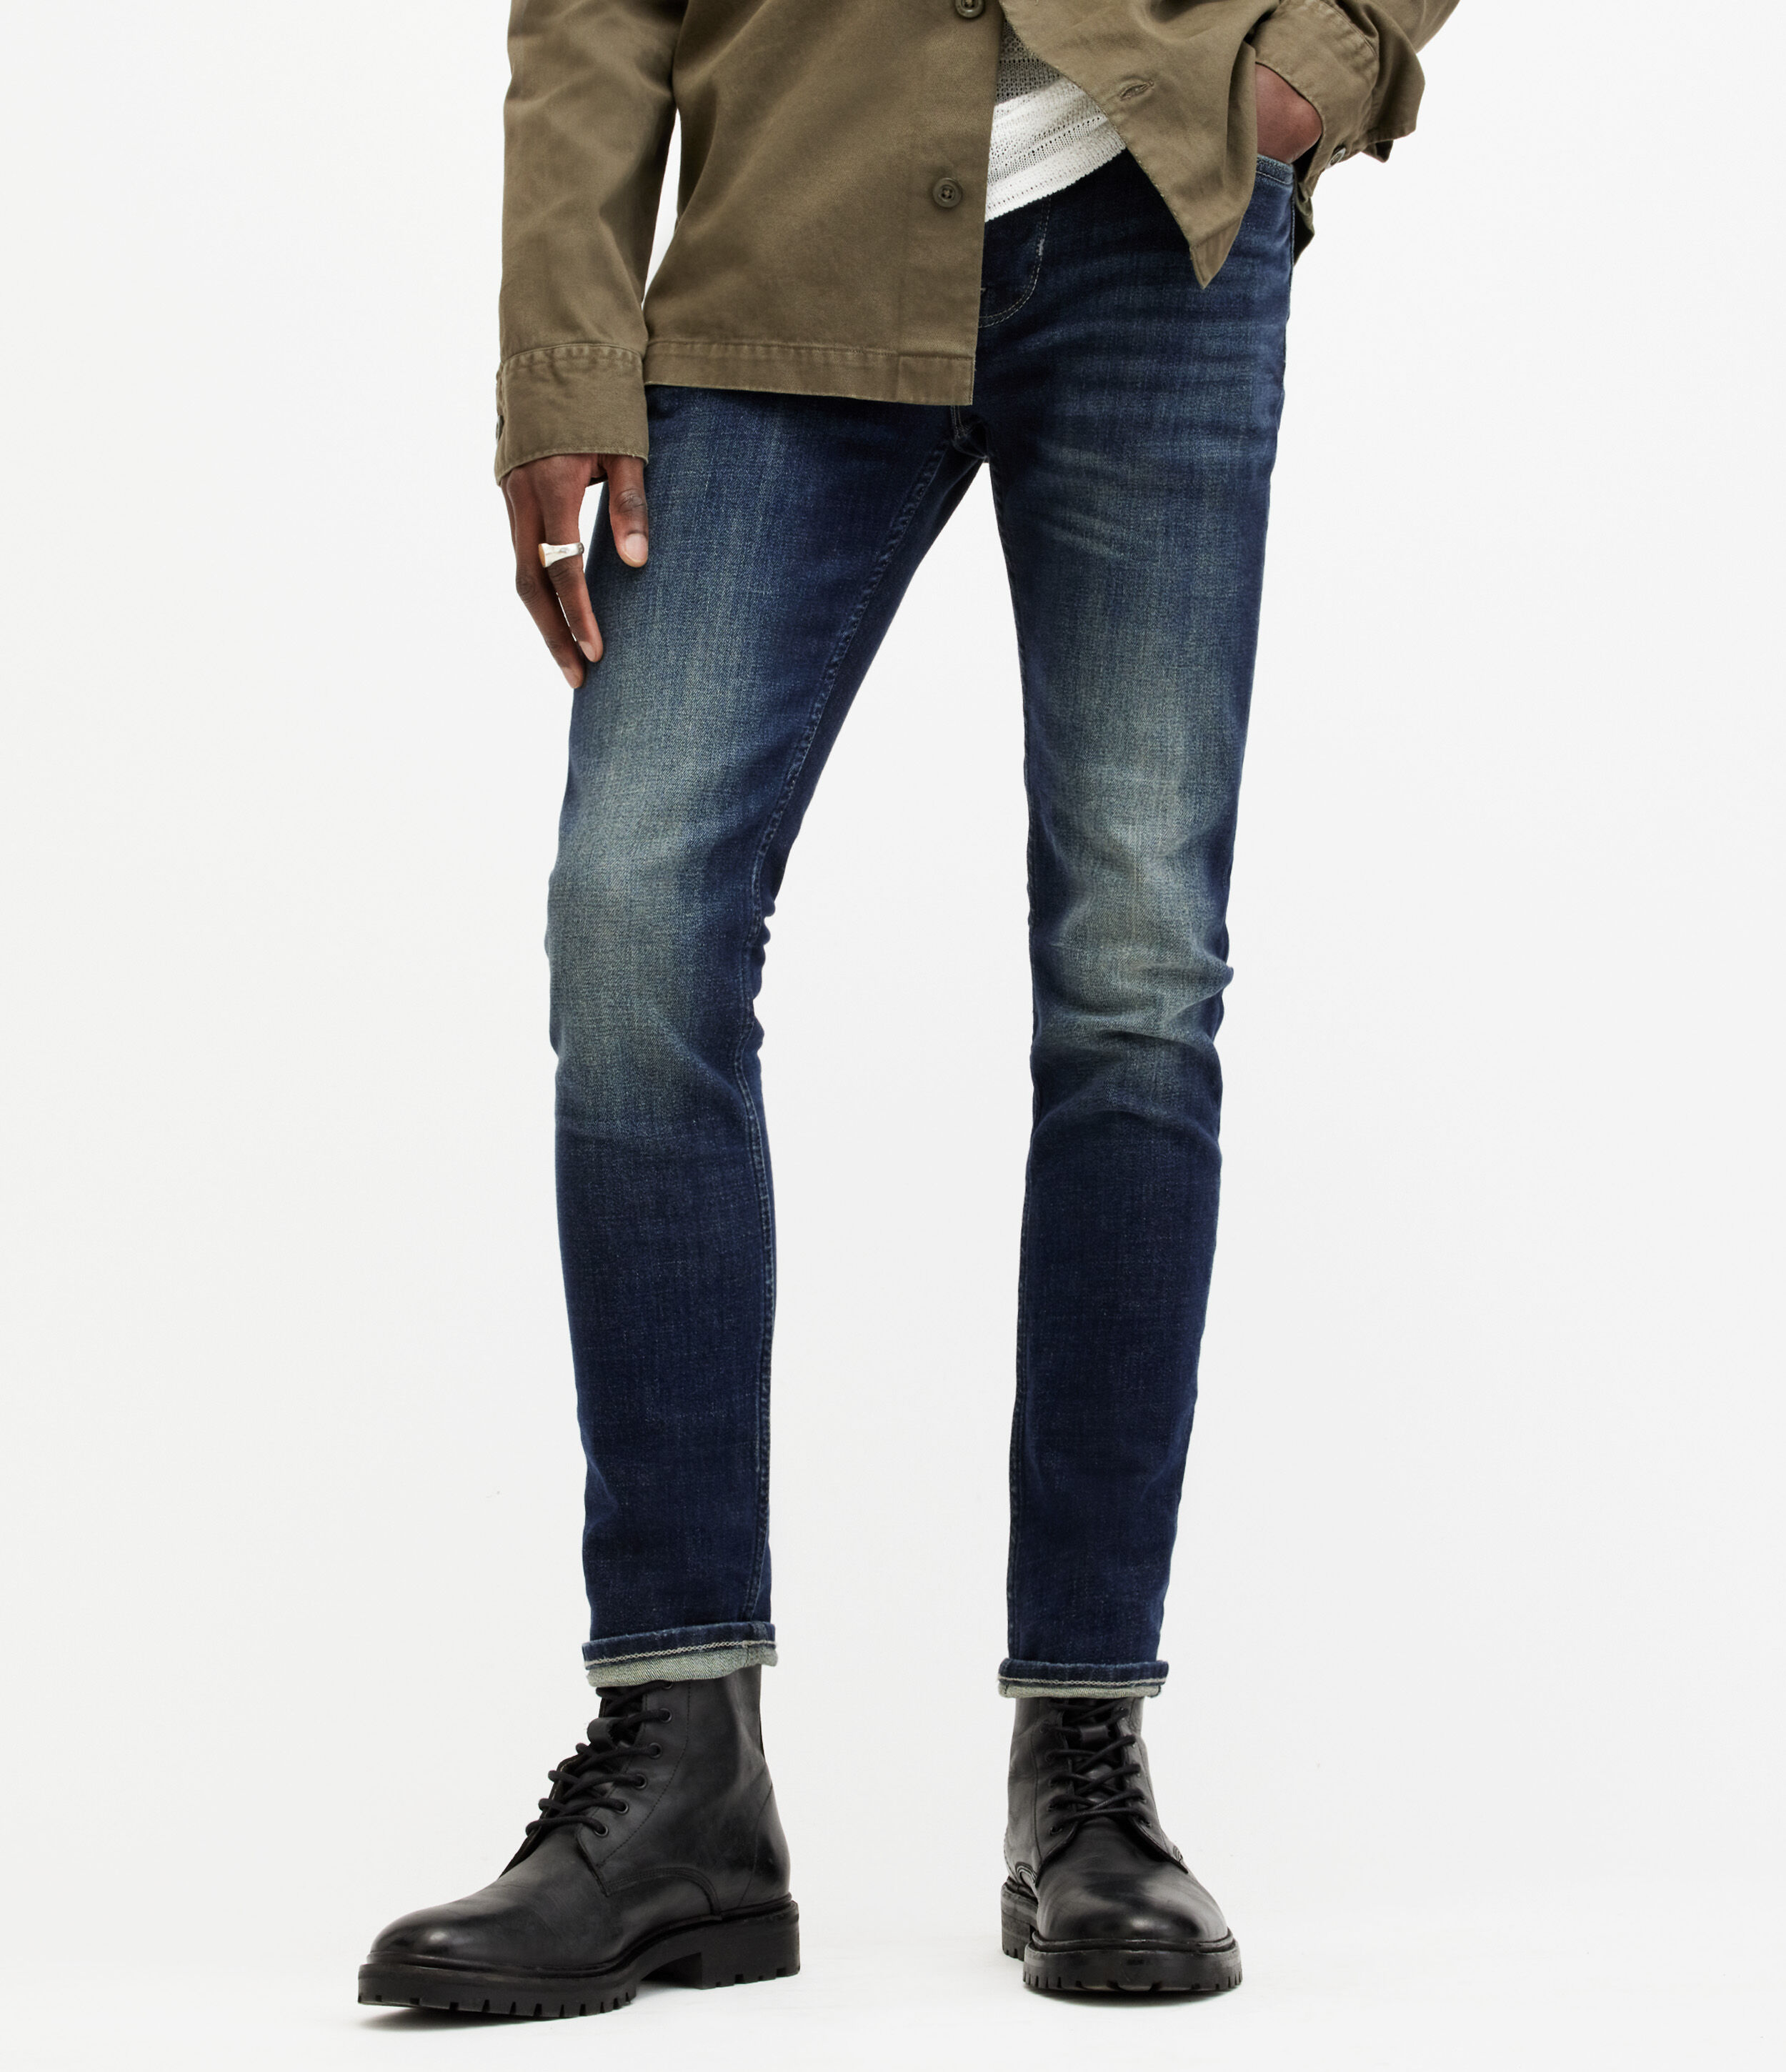 AllSaints Men’s Cigarette Skinny Jeans, Indigo, Size: 28/L32